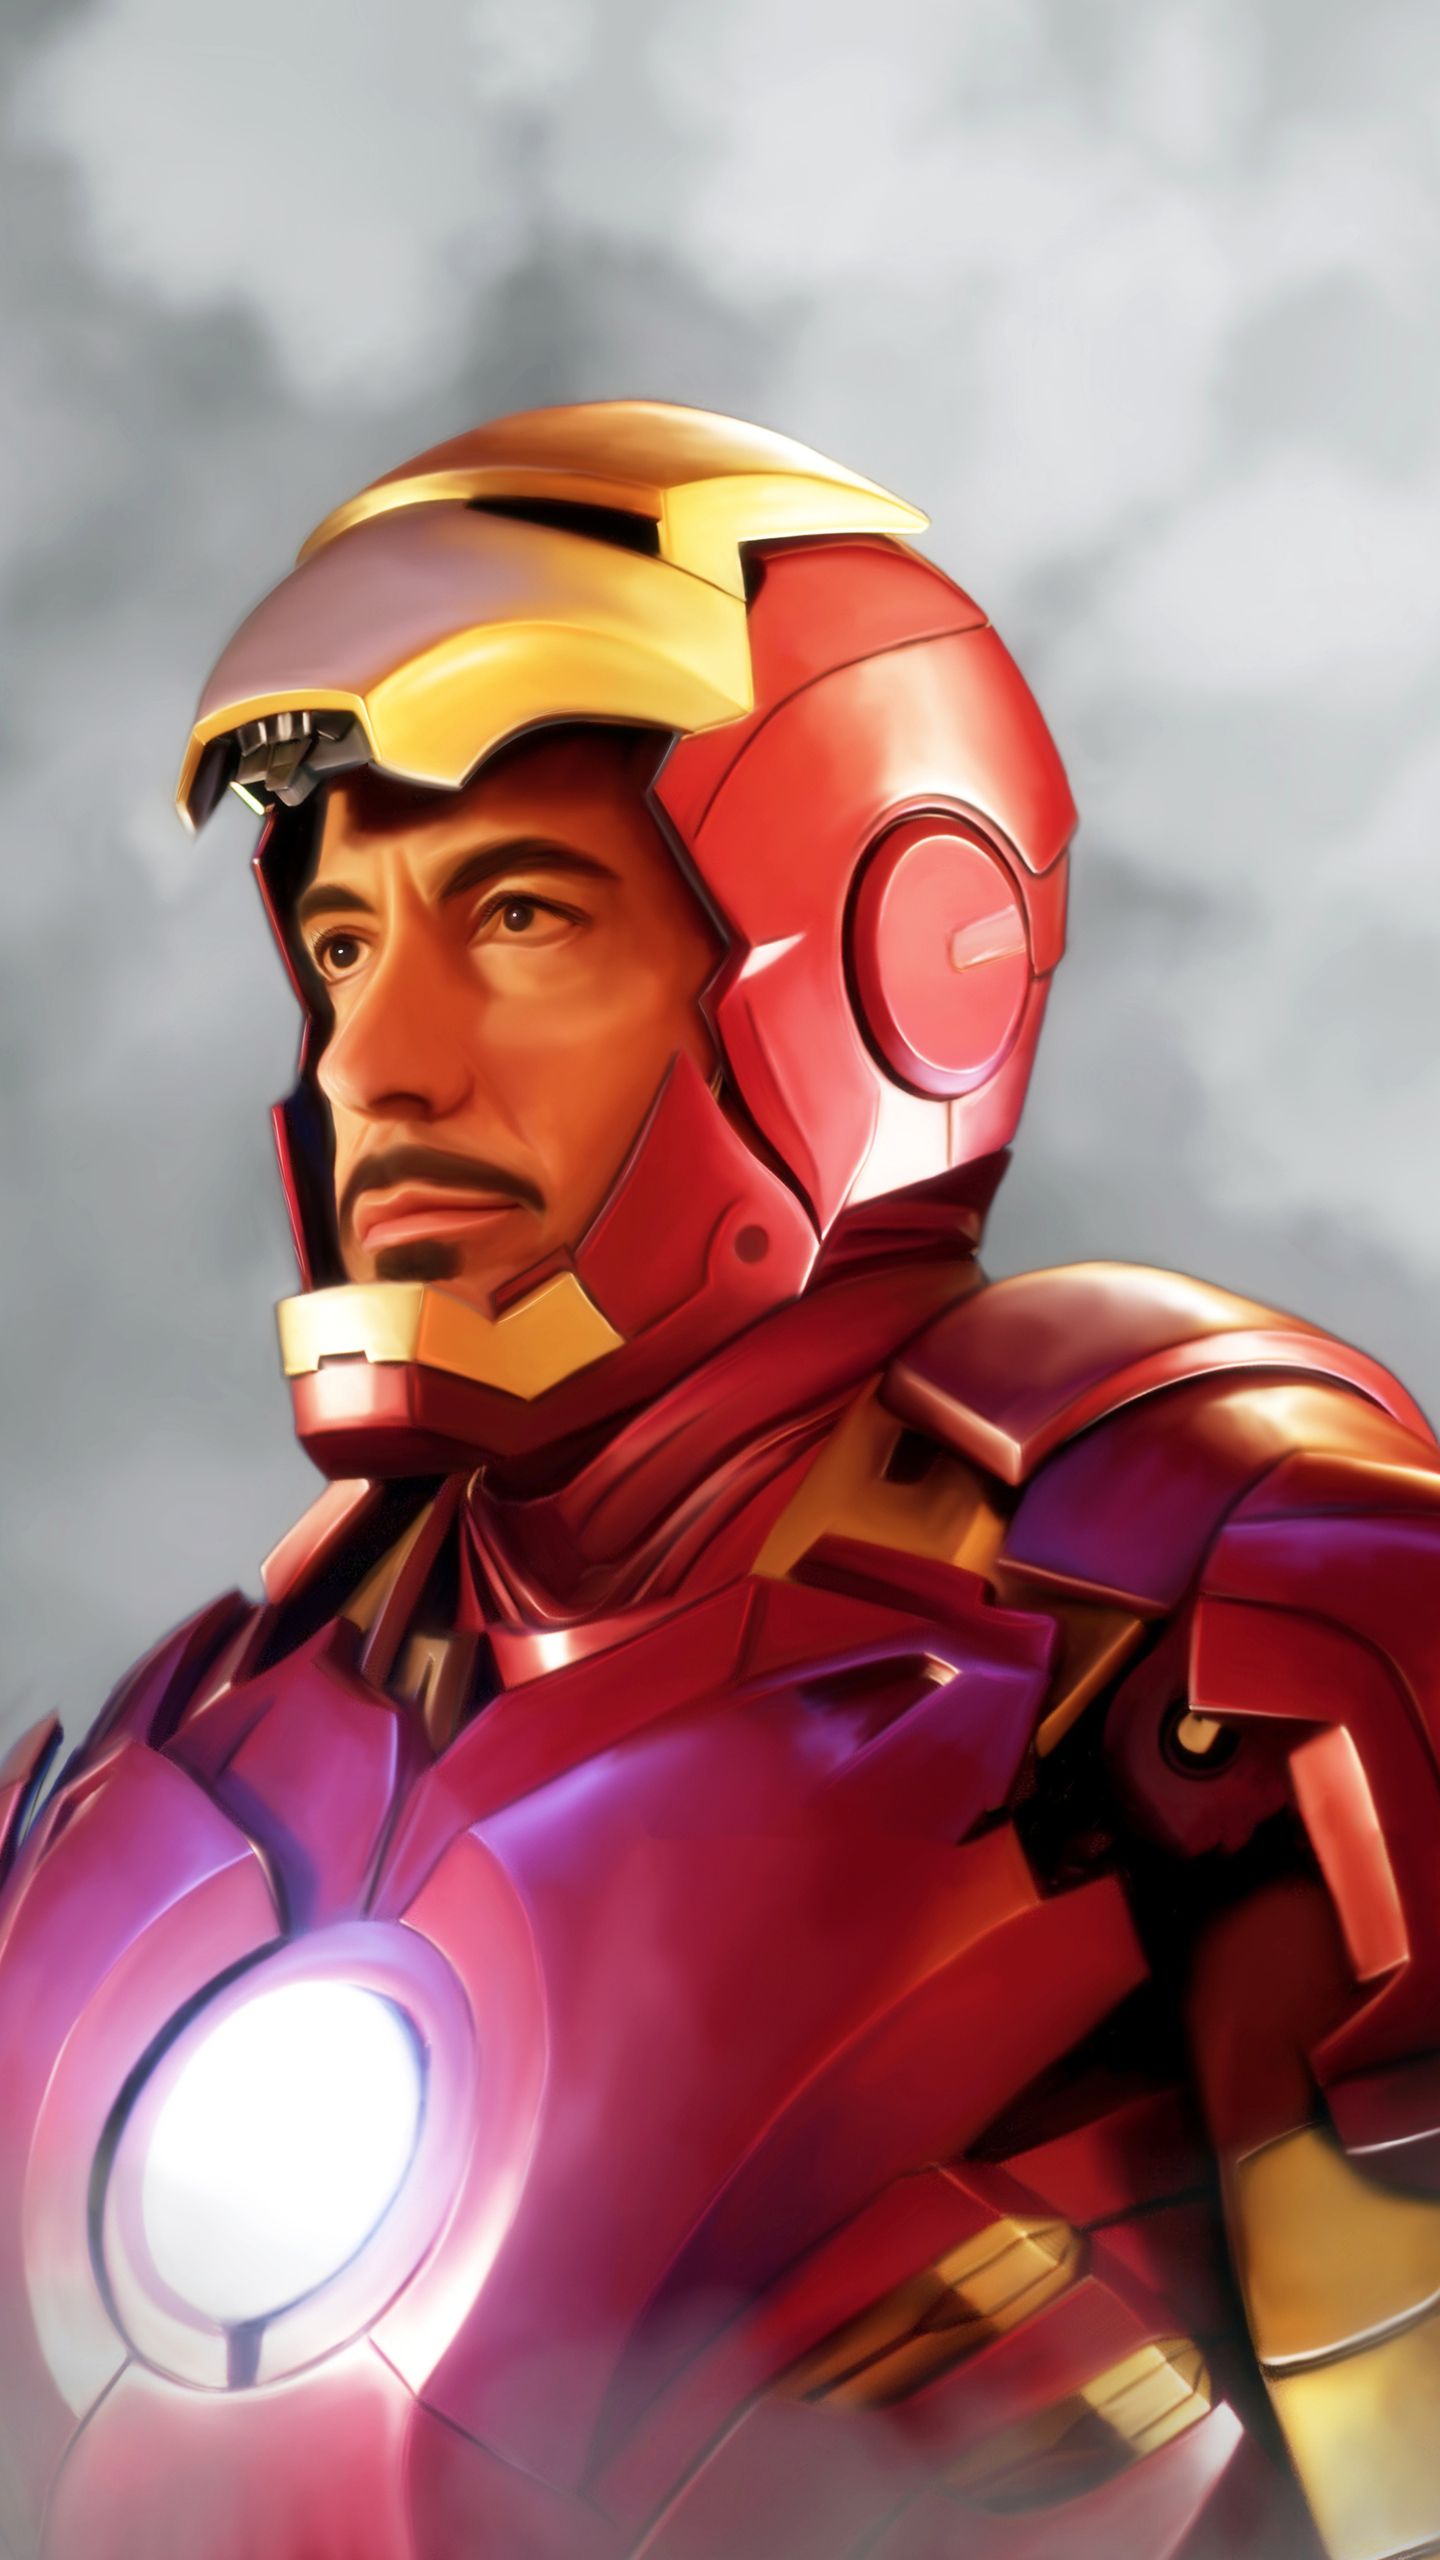 Iron Man Wallpaper. Iron man, Iron man wallpaper, Iron man artwork